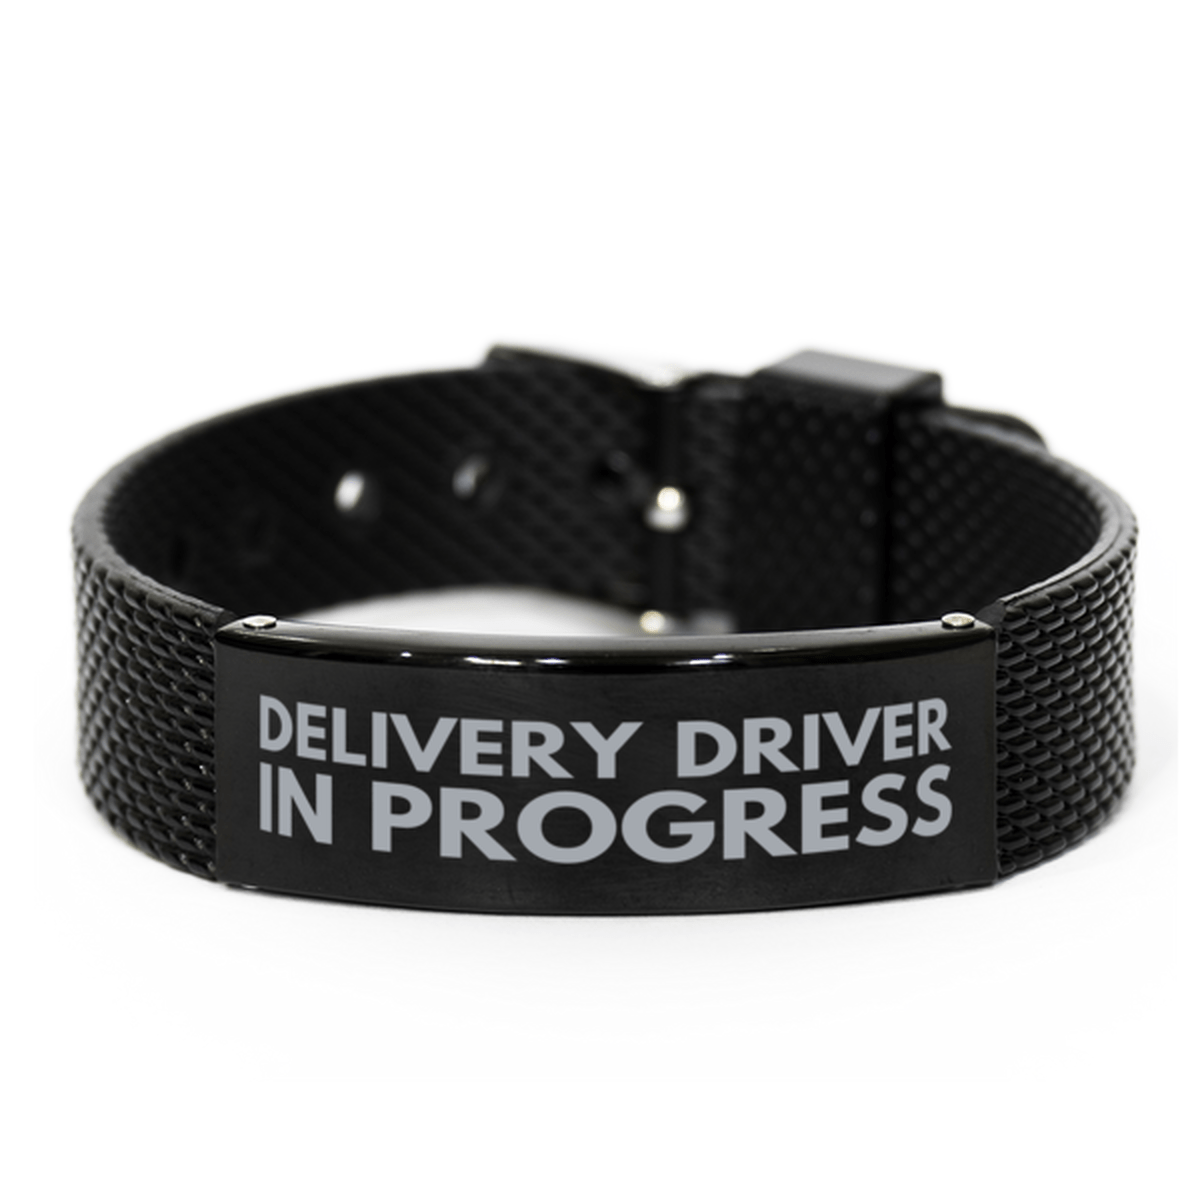 Inspirational Delivery Driver Black Shark Mesh Bracelet, Delivery Driver In Progress, Best Graduation Gifts for Students